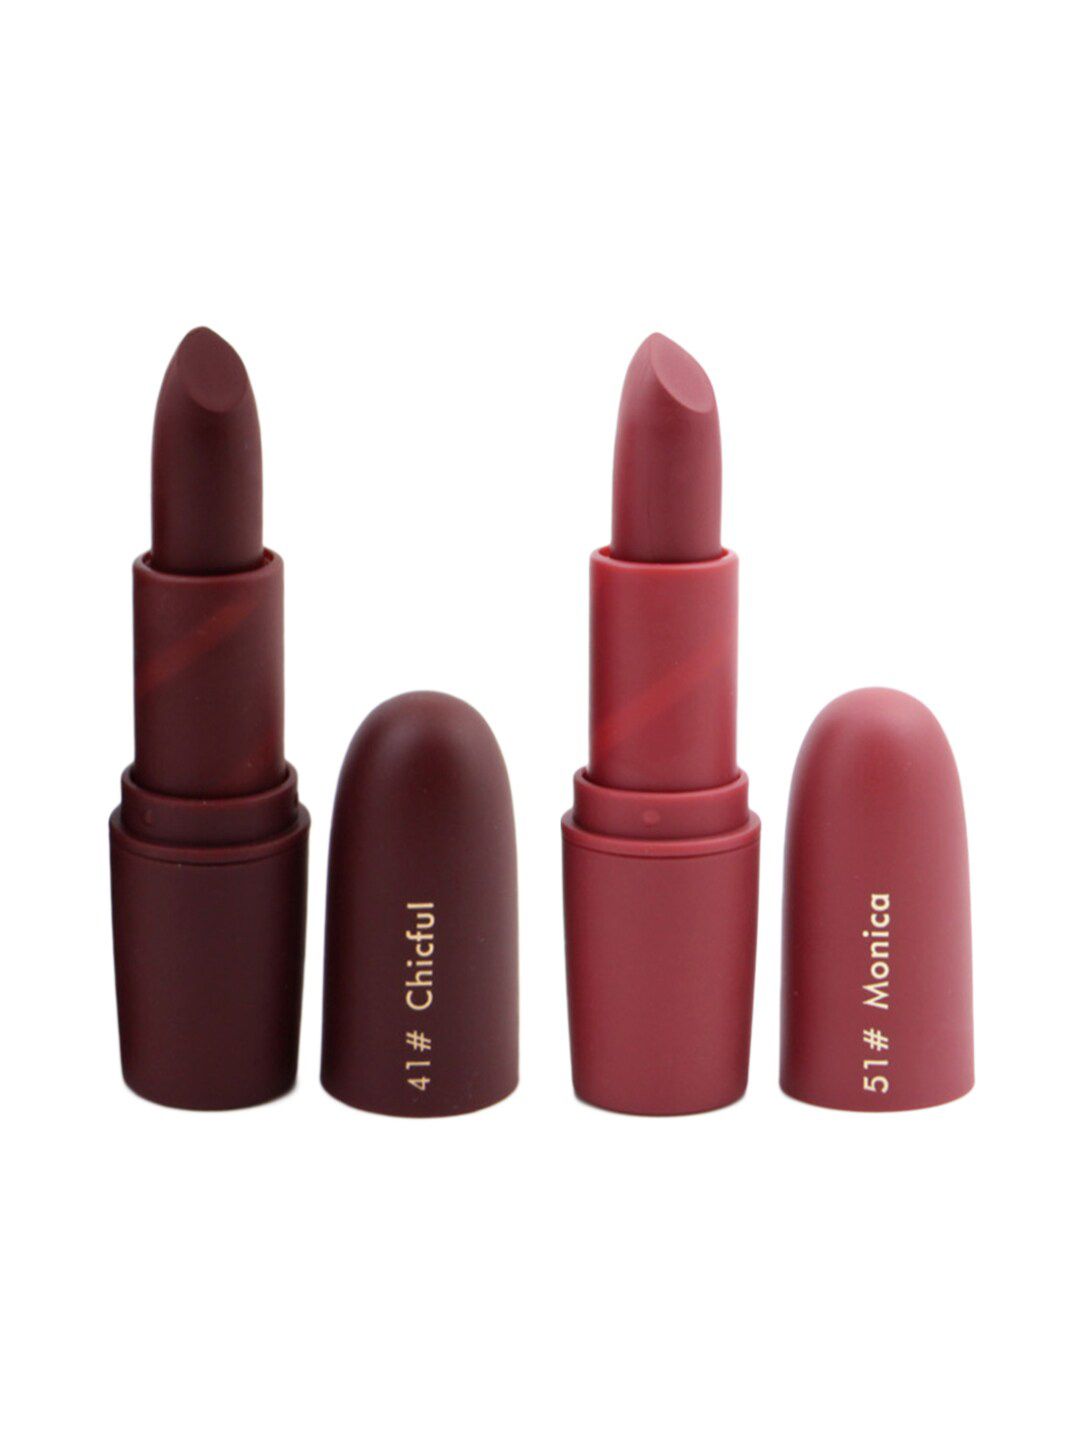 MISS ROSE Set of 2 Matte Creamy Lipsticks - Chicful 41 & Monica 51 Price in India